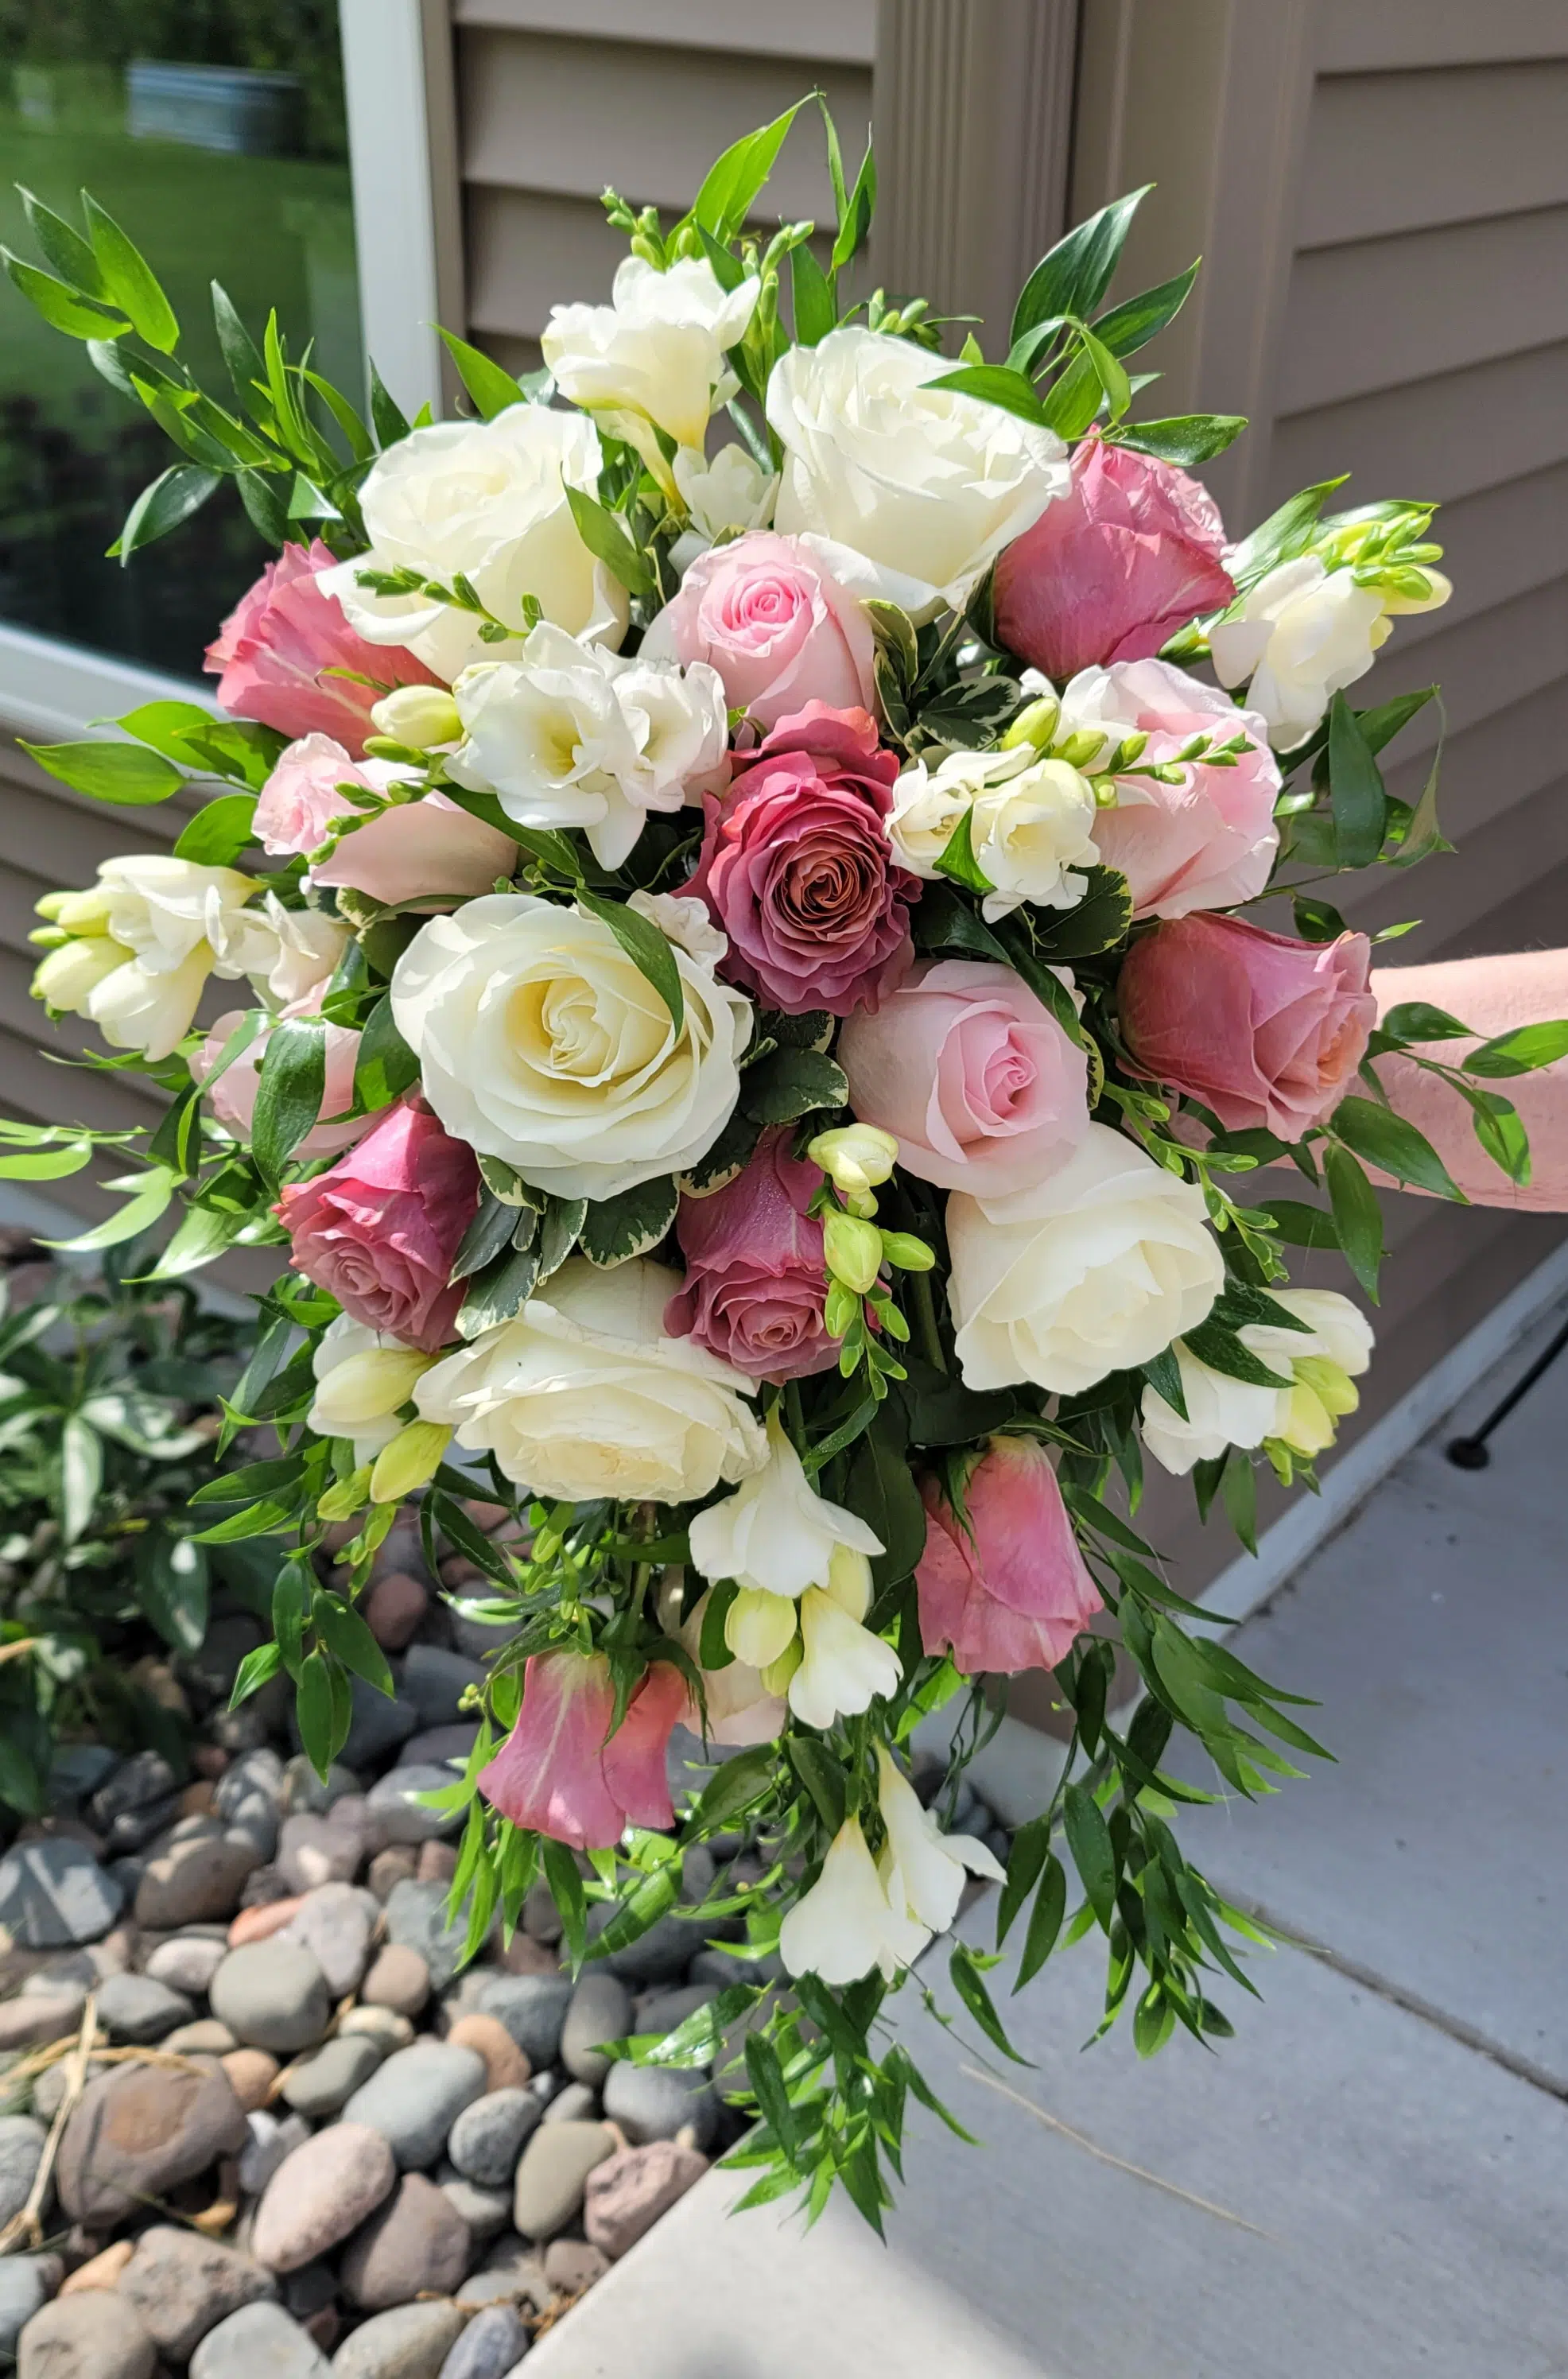 Custom Floral Design | Floral Designs for Weddings & other Events